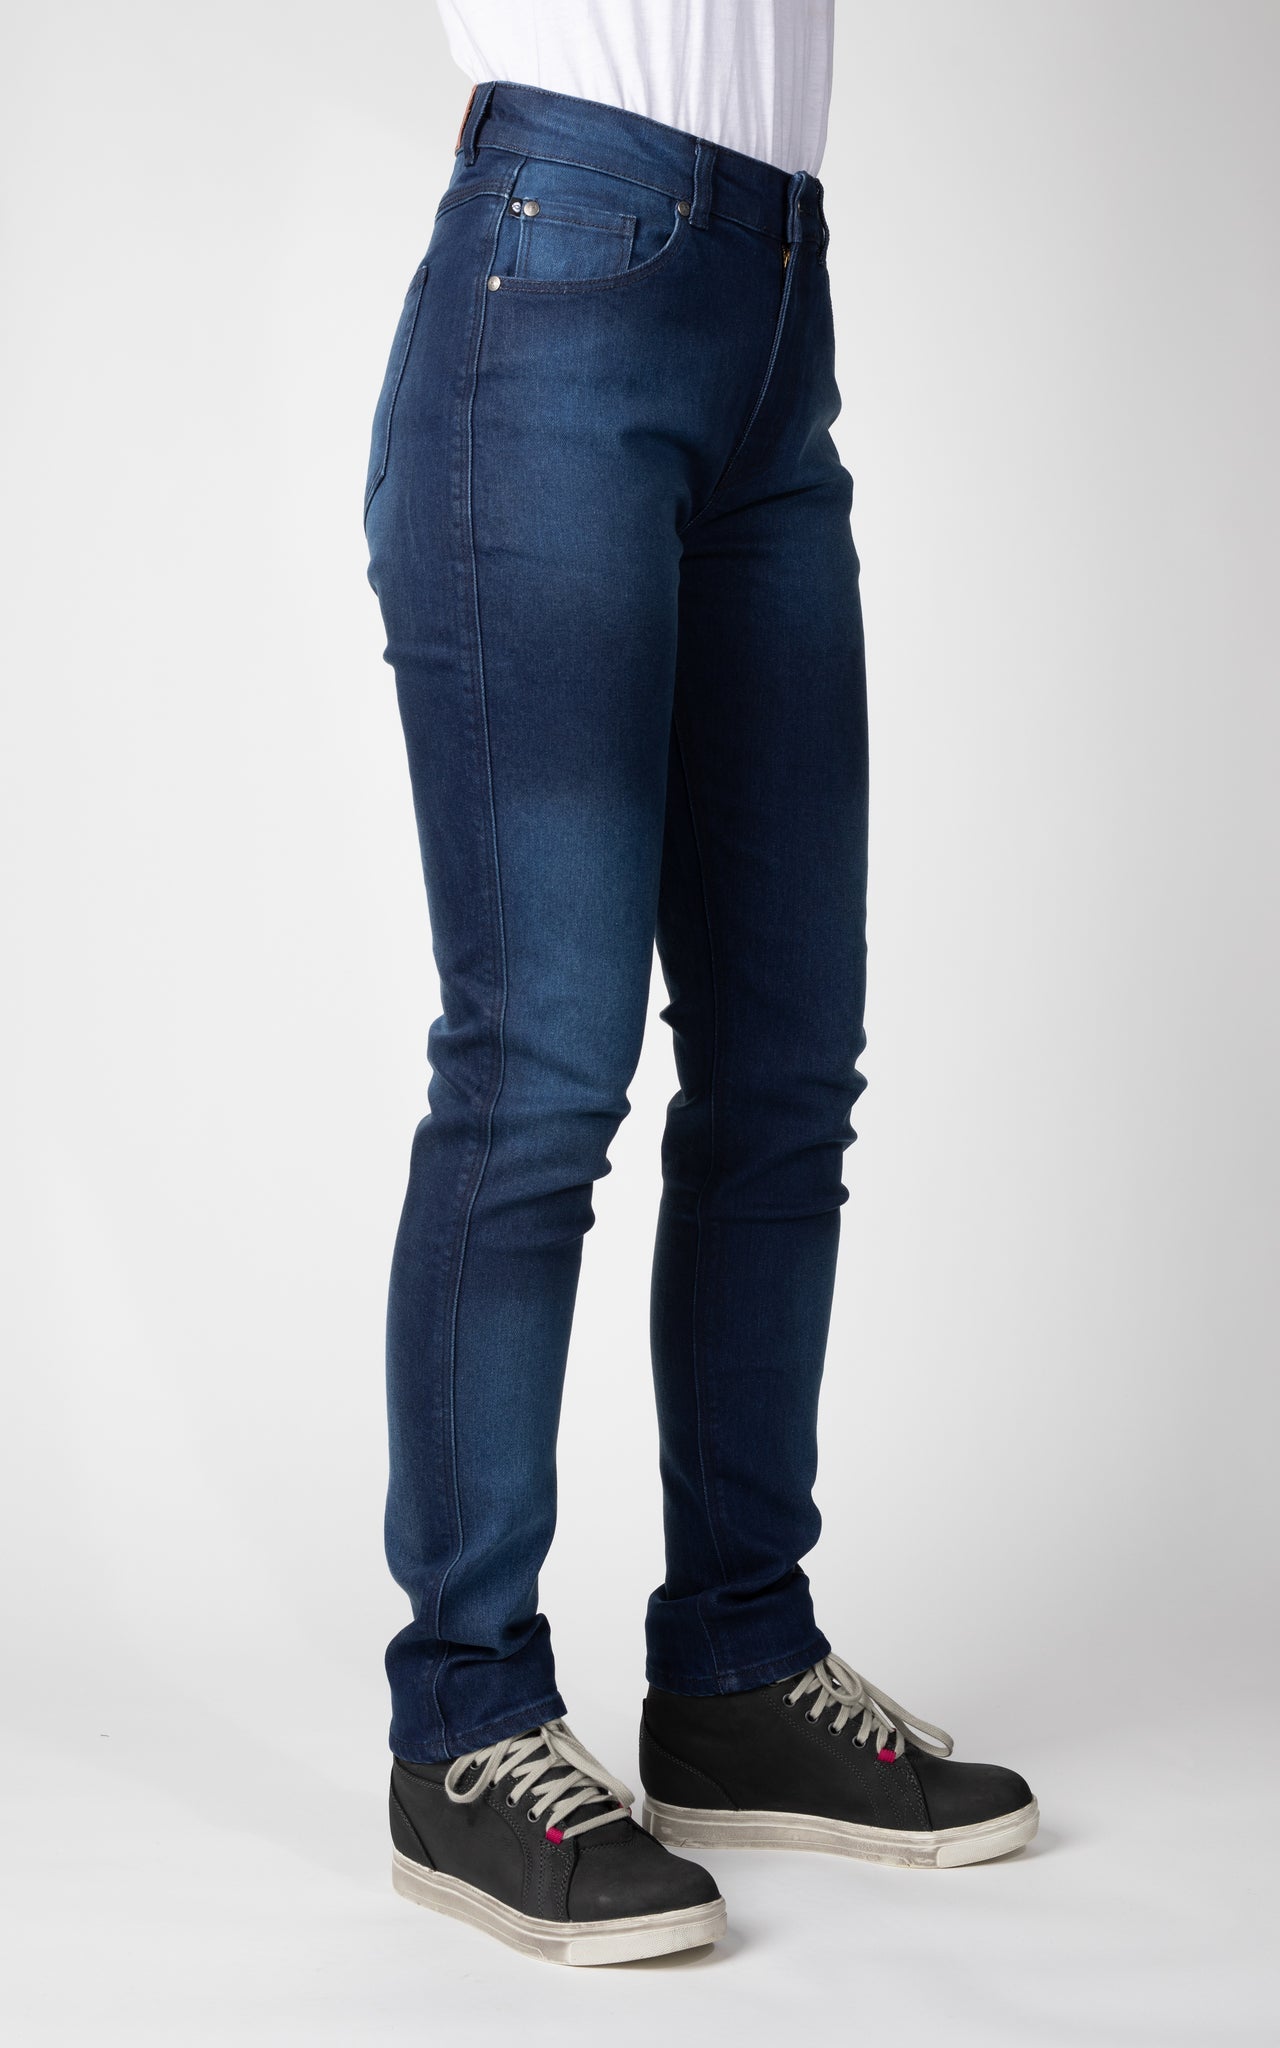 Woman's legs wearing blue lady motorcycle jeans from Bull-it